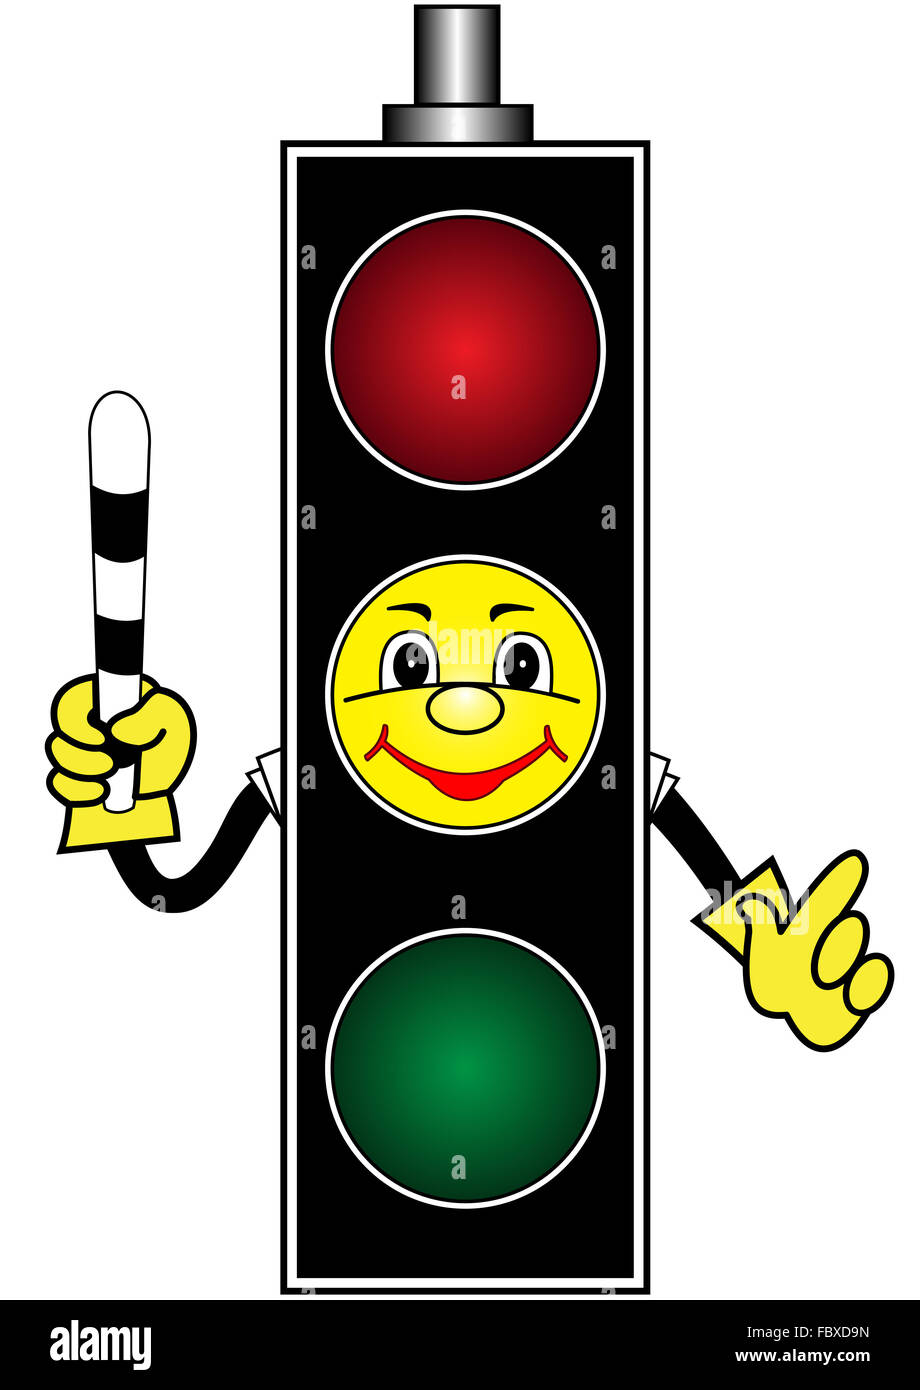 Cartoon yellow traffic light Stock Photo